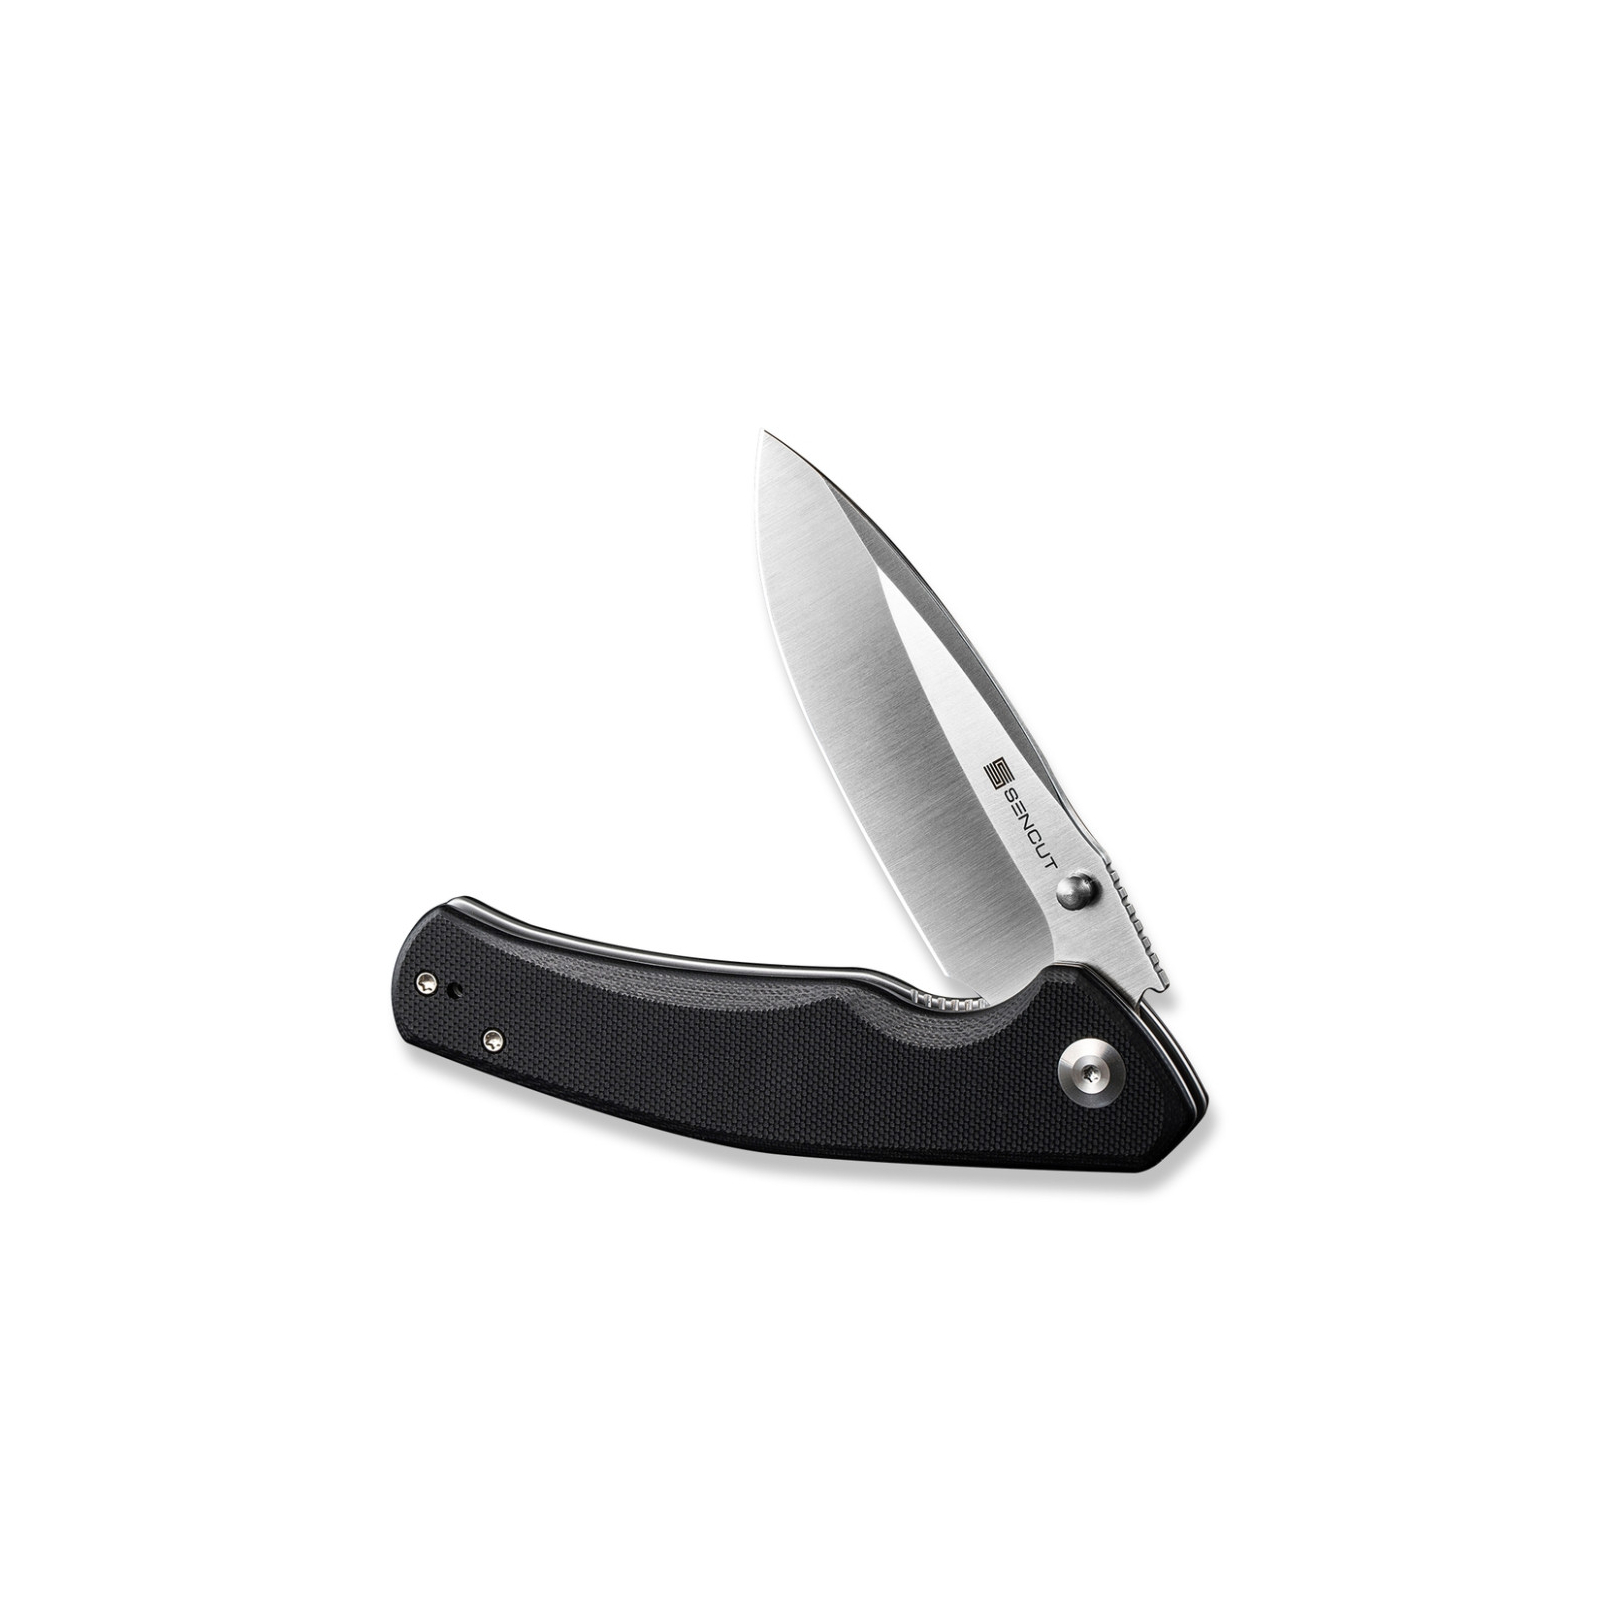 Нож Sencut Slashkin Satin Black G10 (S20066-1) изображение 4